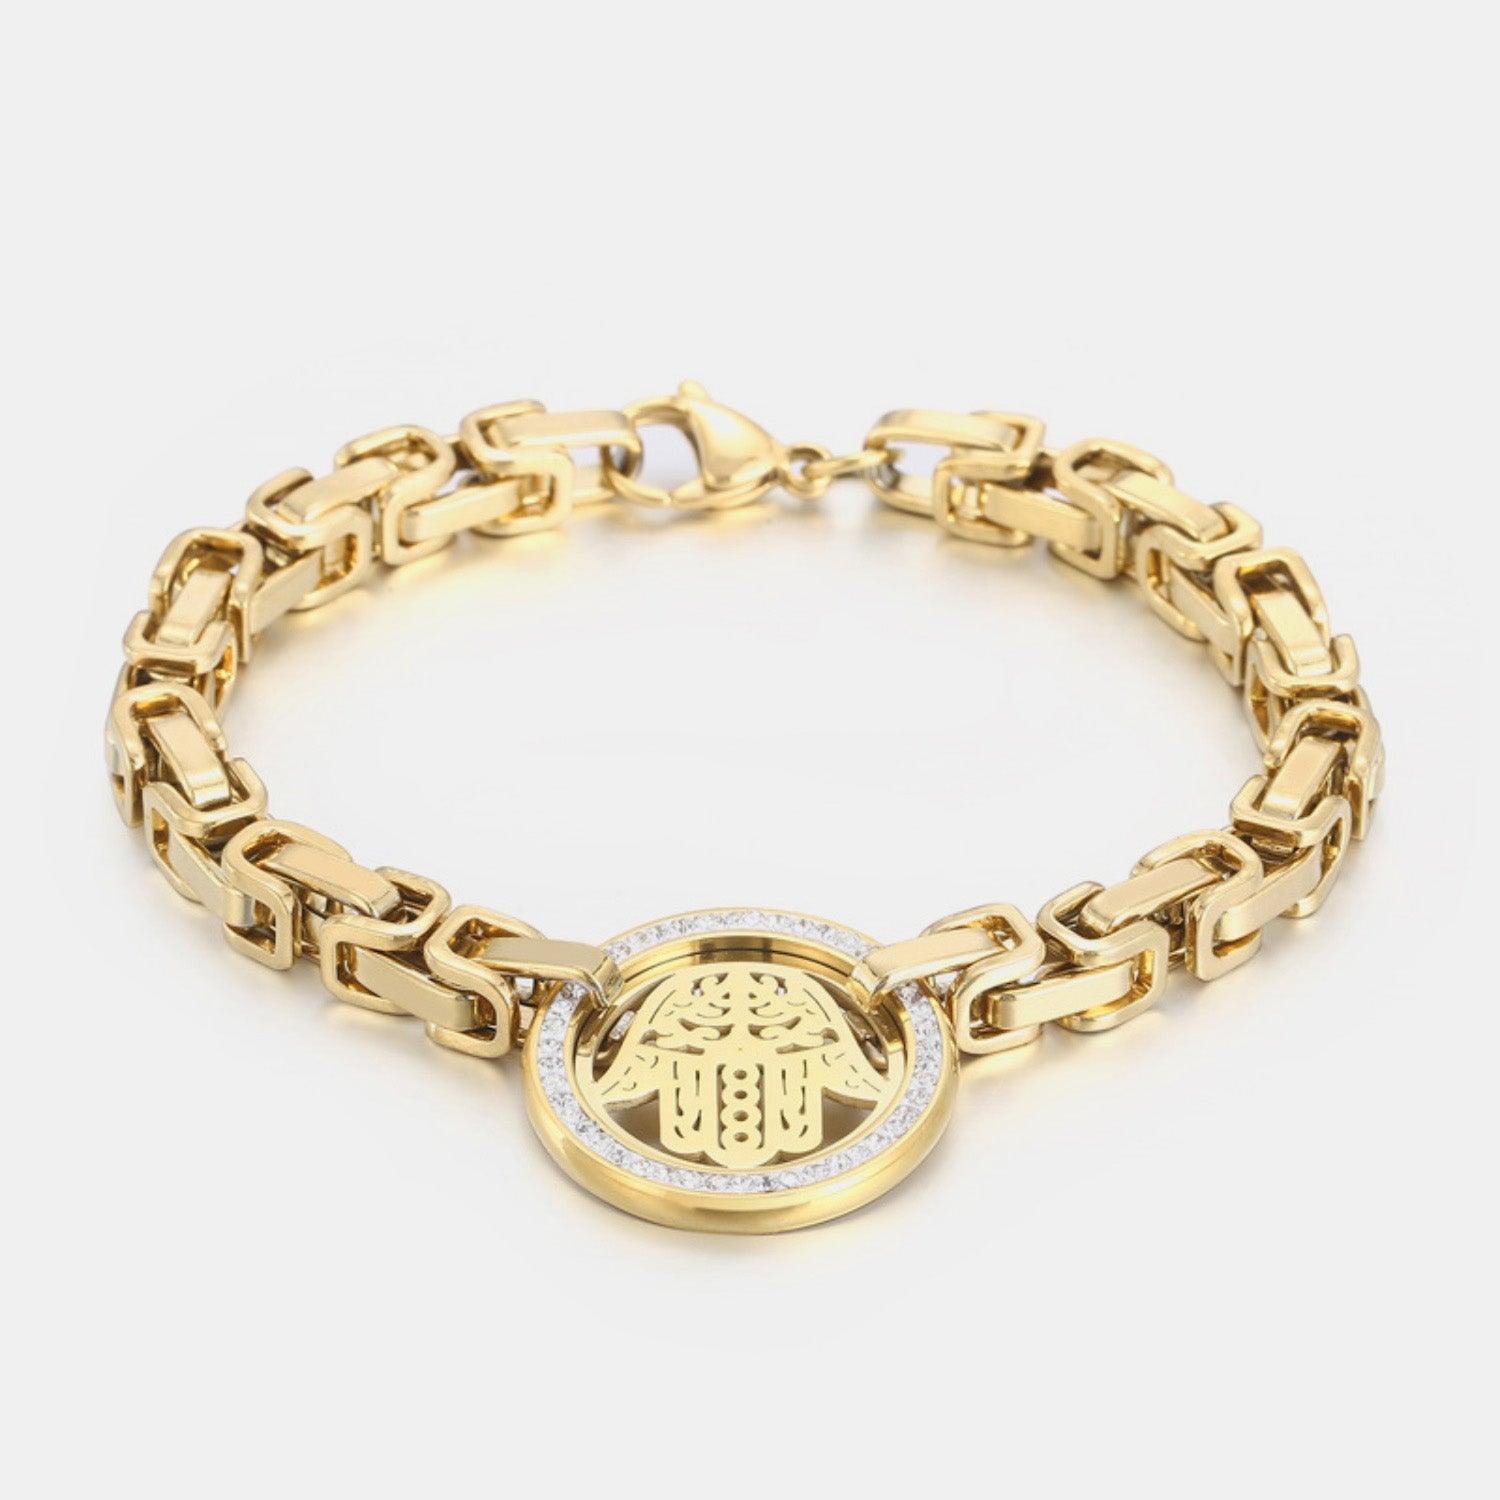 a gold bracelet with a hamsah charm